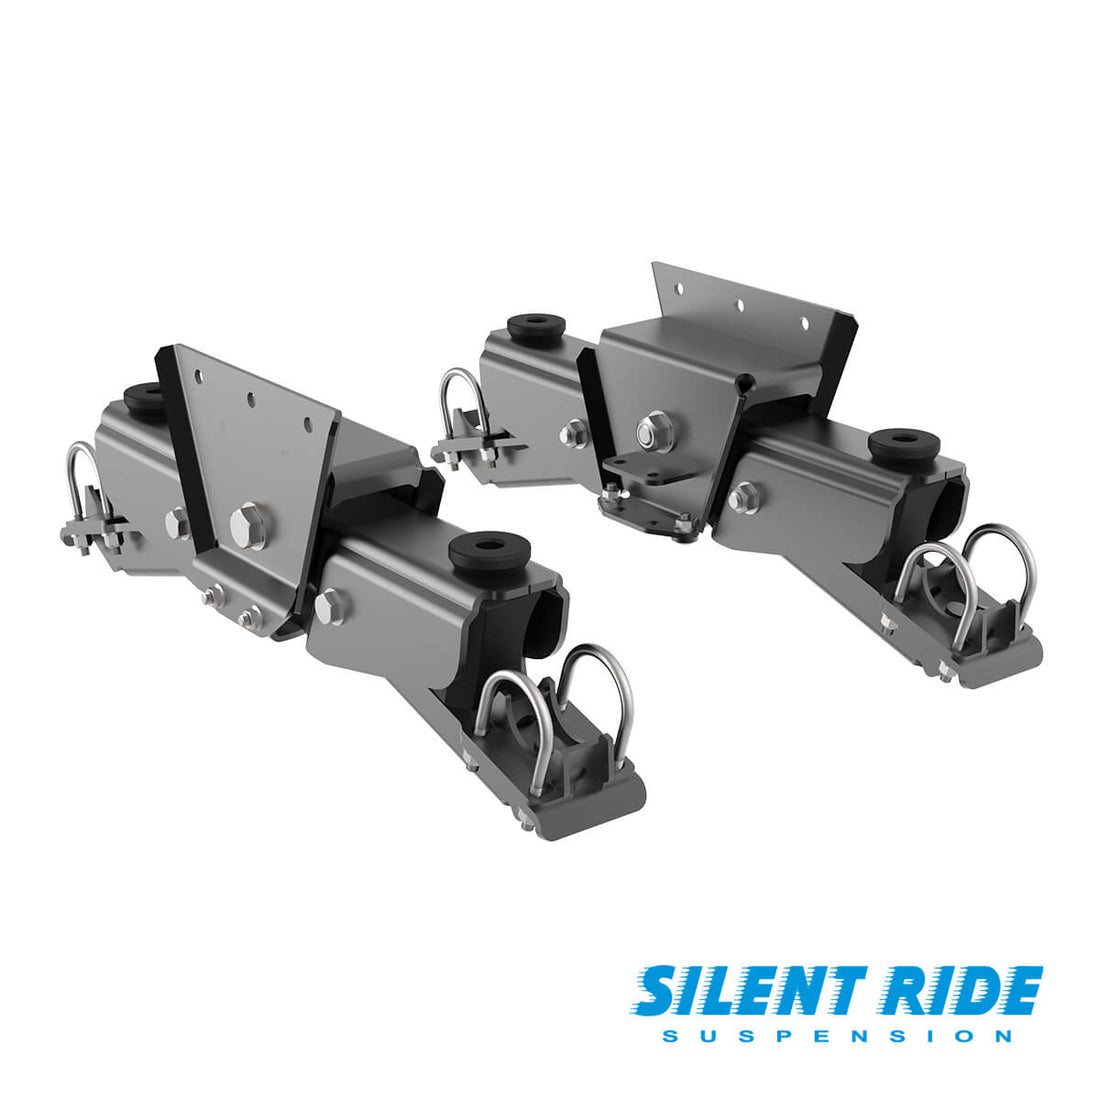 14000 lb Tandem Axle Silent Ride Trailer Suspension with 33 inch Axle Spread